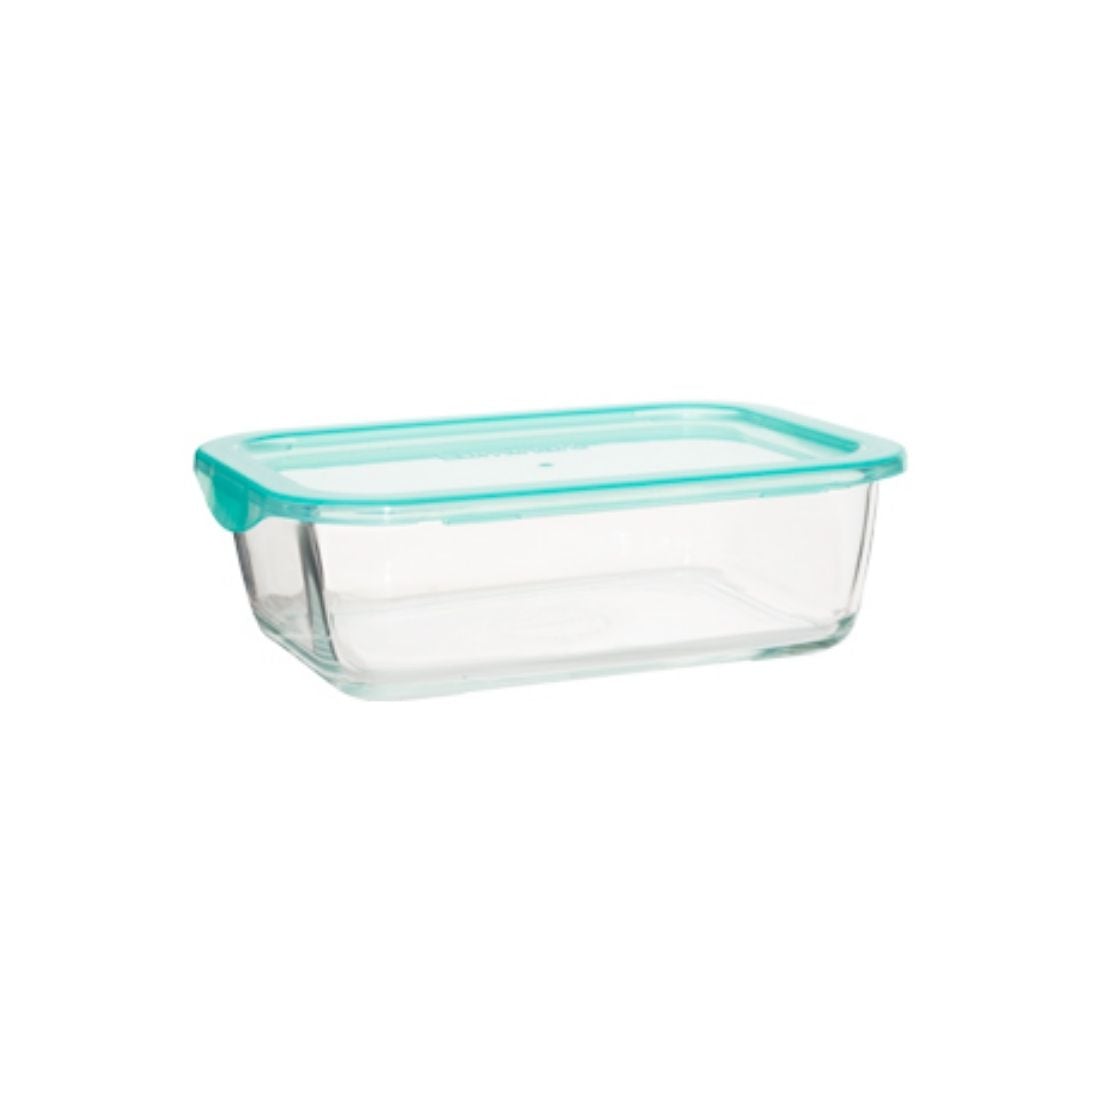 Rectangular Glass Storage Bowl with Turquoise Plastic Lid - (1220 ml)